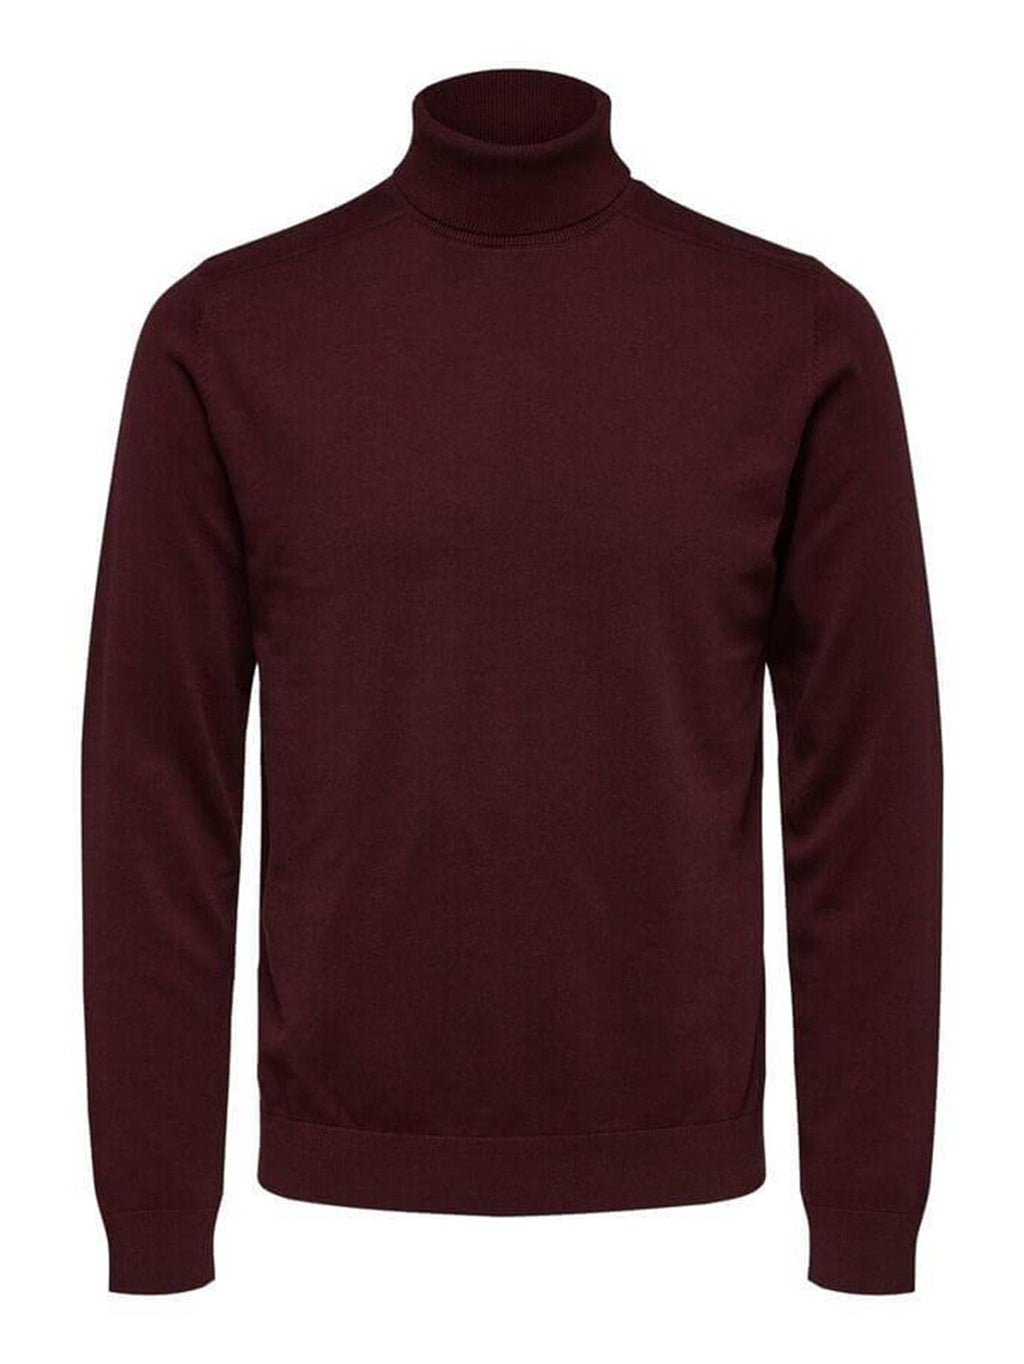 Pima cotton turtleneck sweater - Burgundy Red